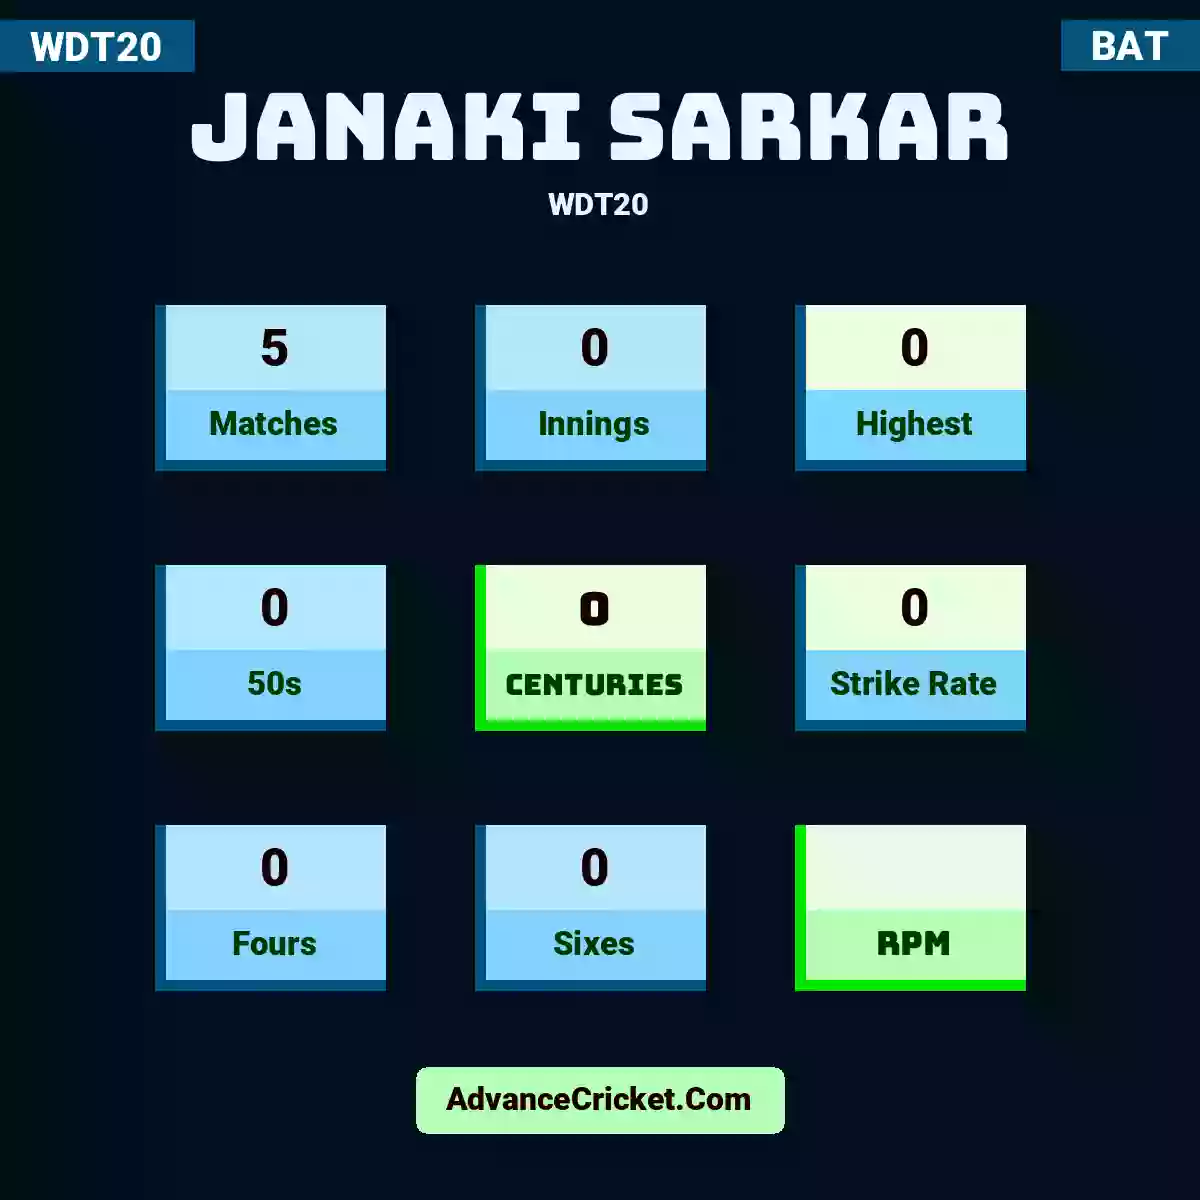 Janaki Sarkar WDT20 , Janaki Sarkar played 5 matches, scored 0 runs as highest, 0 half-centuries, and 0 centuries, with a strike rate of 0. J.Sarkar hit 0 fours and 0 sixes.